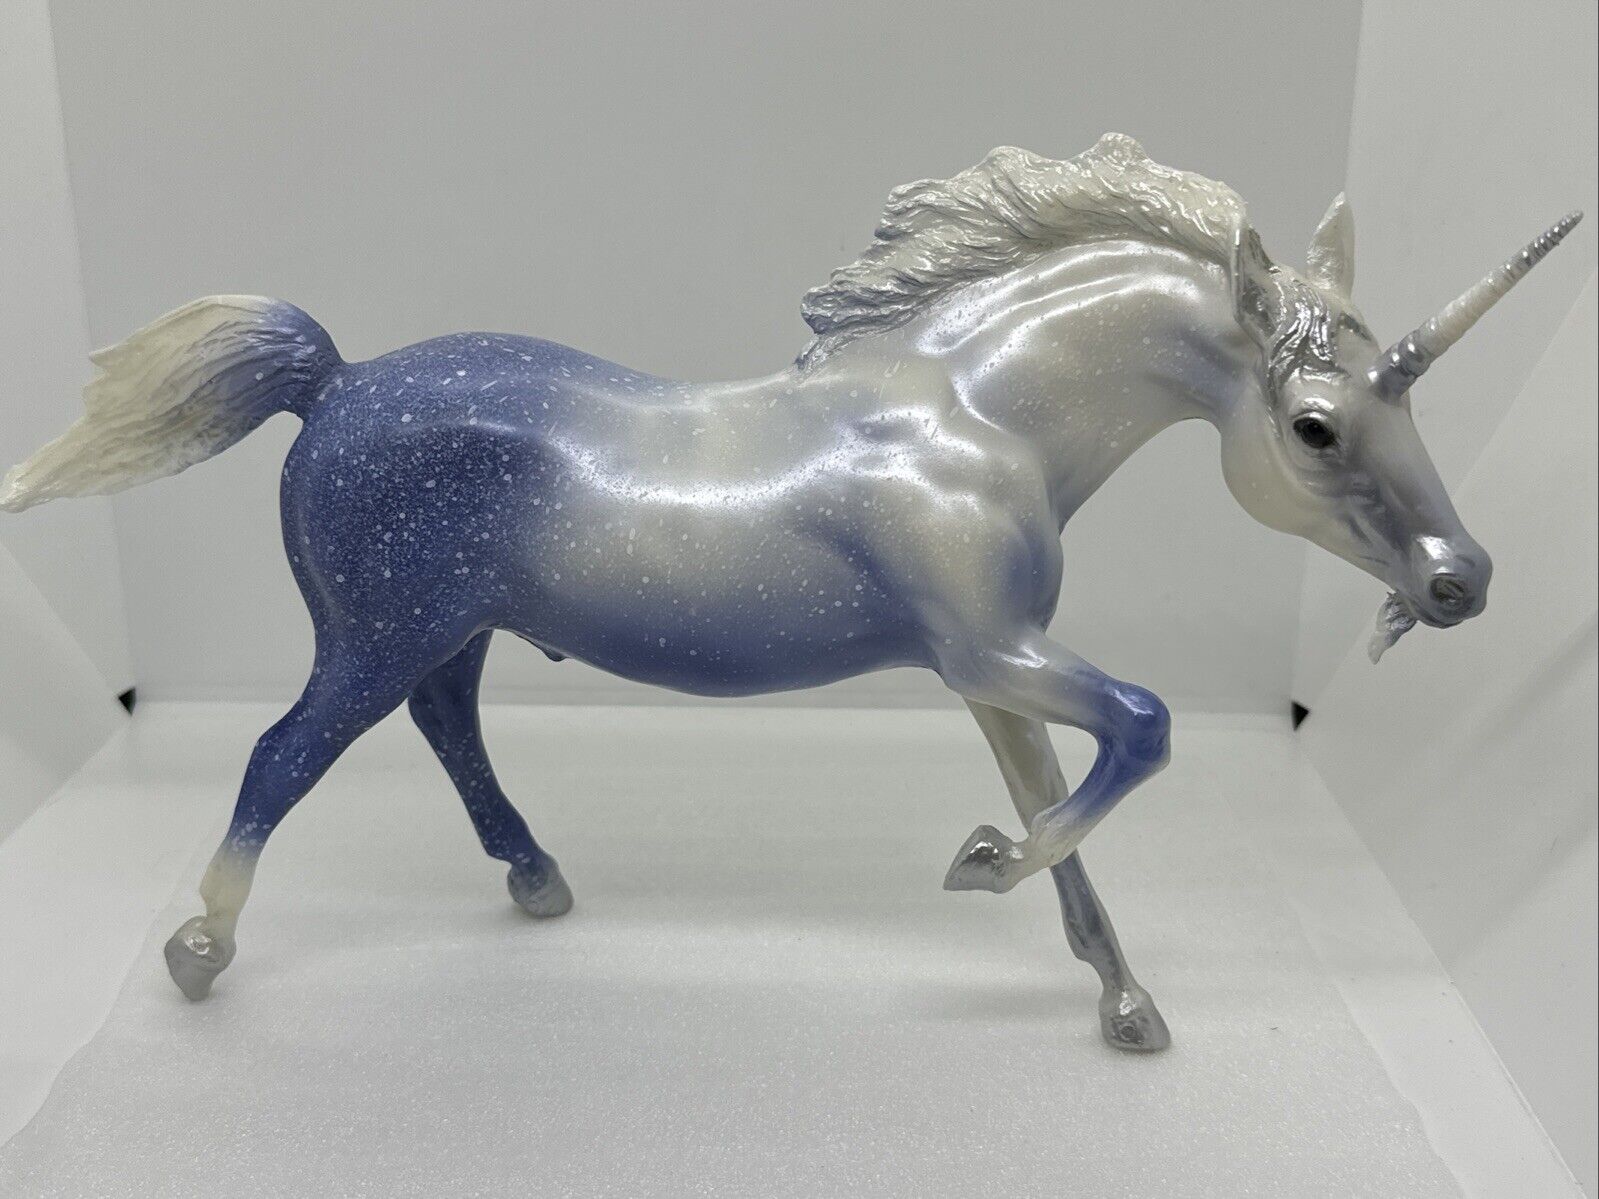 BREYER HORSE STARDUST BLUE PEARL UNICORN FIGURE #1146 TRADITIONAL RETIRED